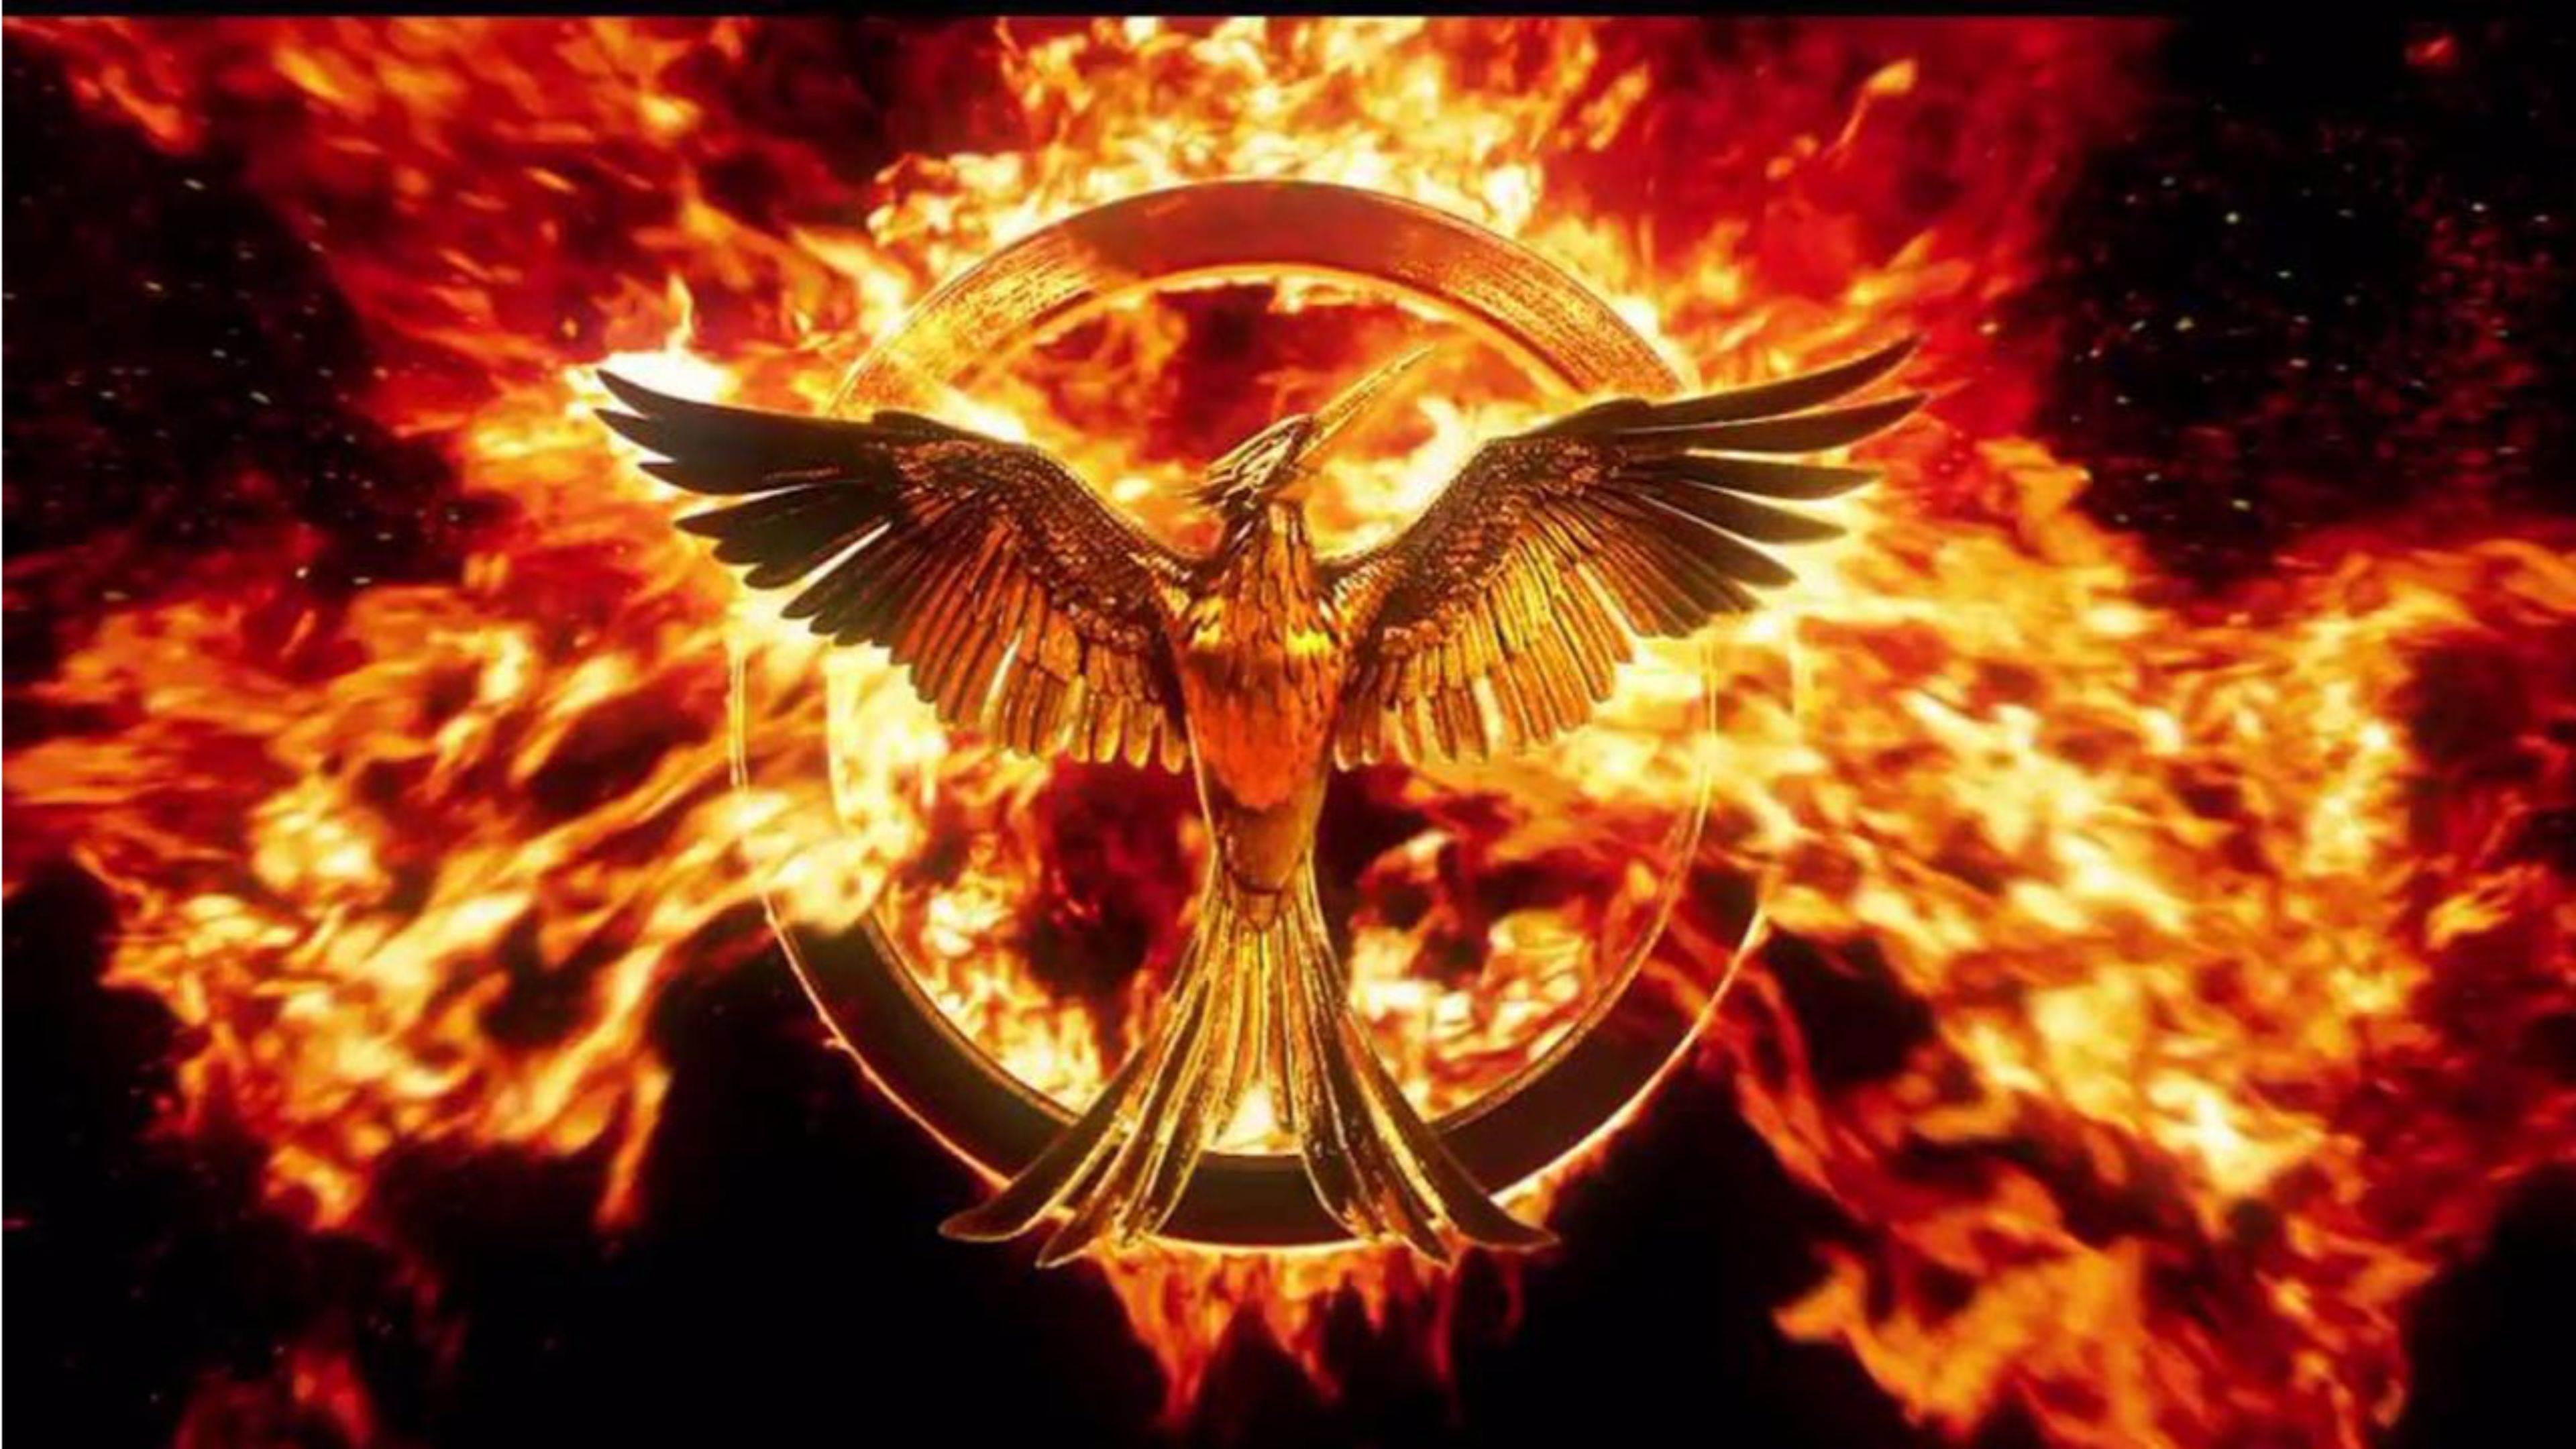  The Hunger Games Mockingjay Part 4K Wallpaper Free 4K Wallpaper